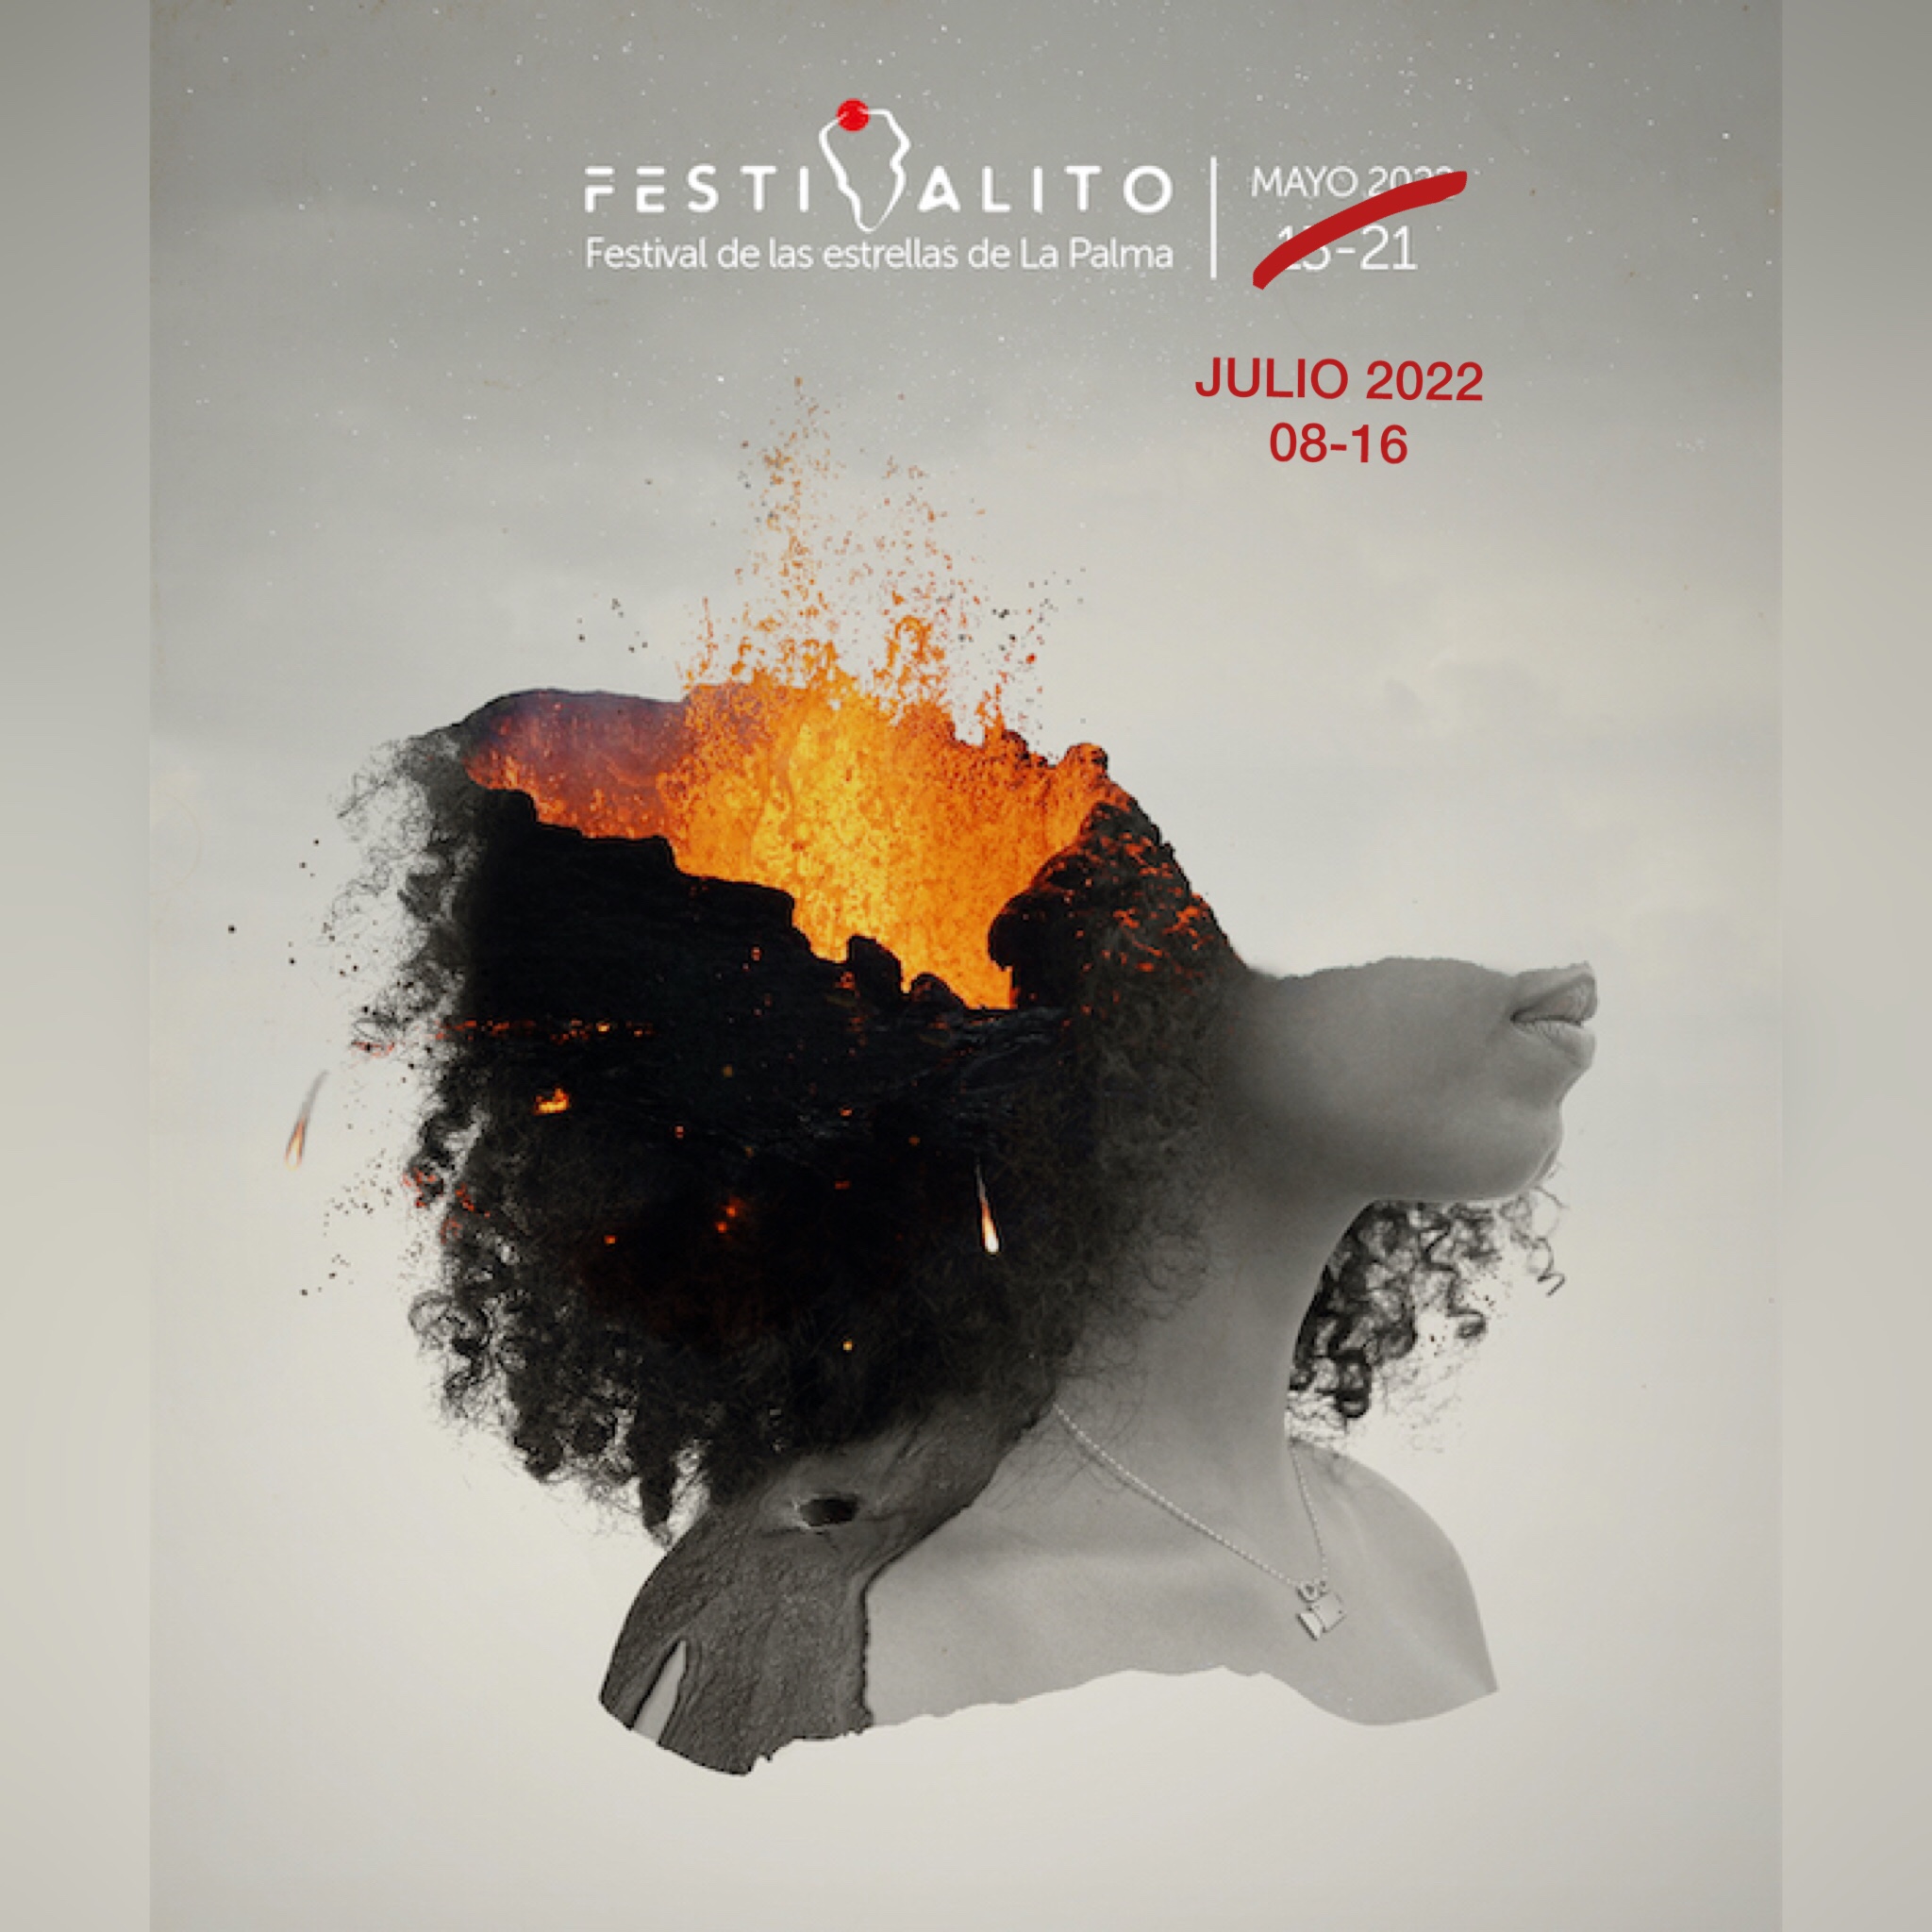 festivalito-la-palma-julio-2022